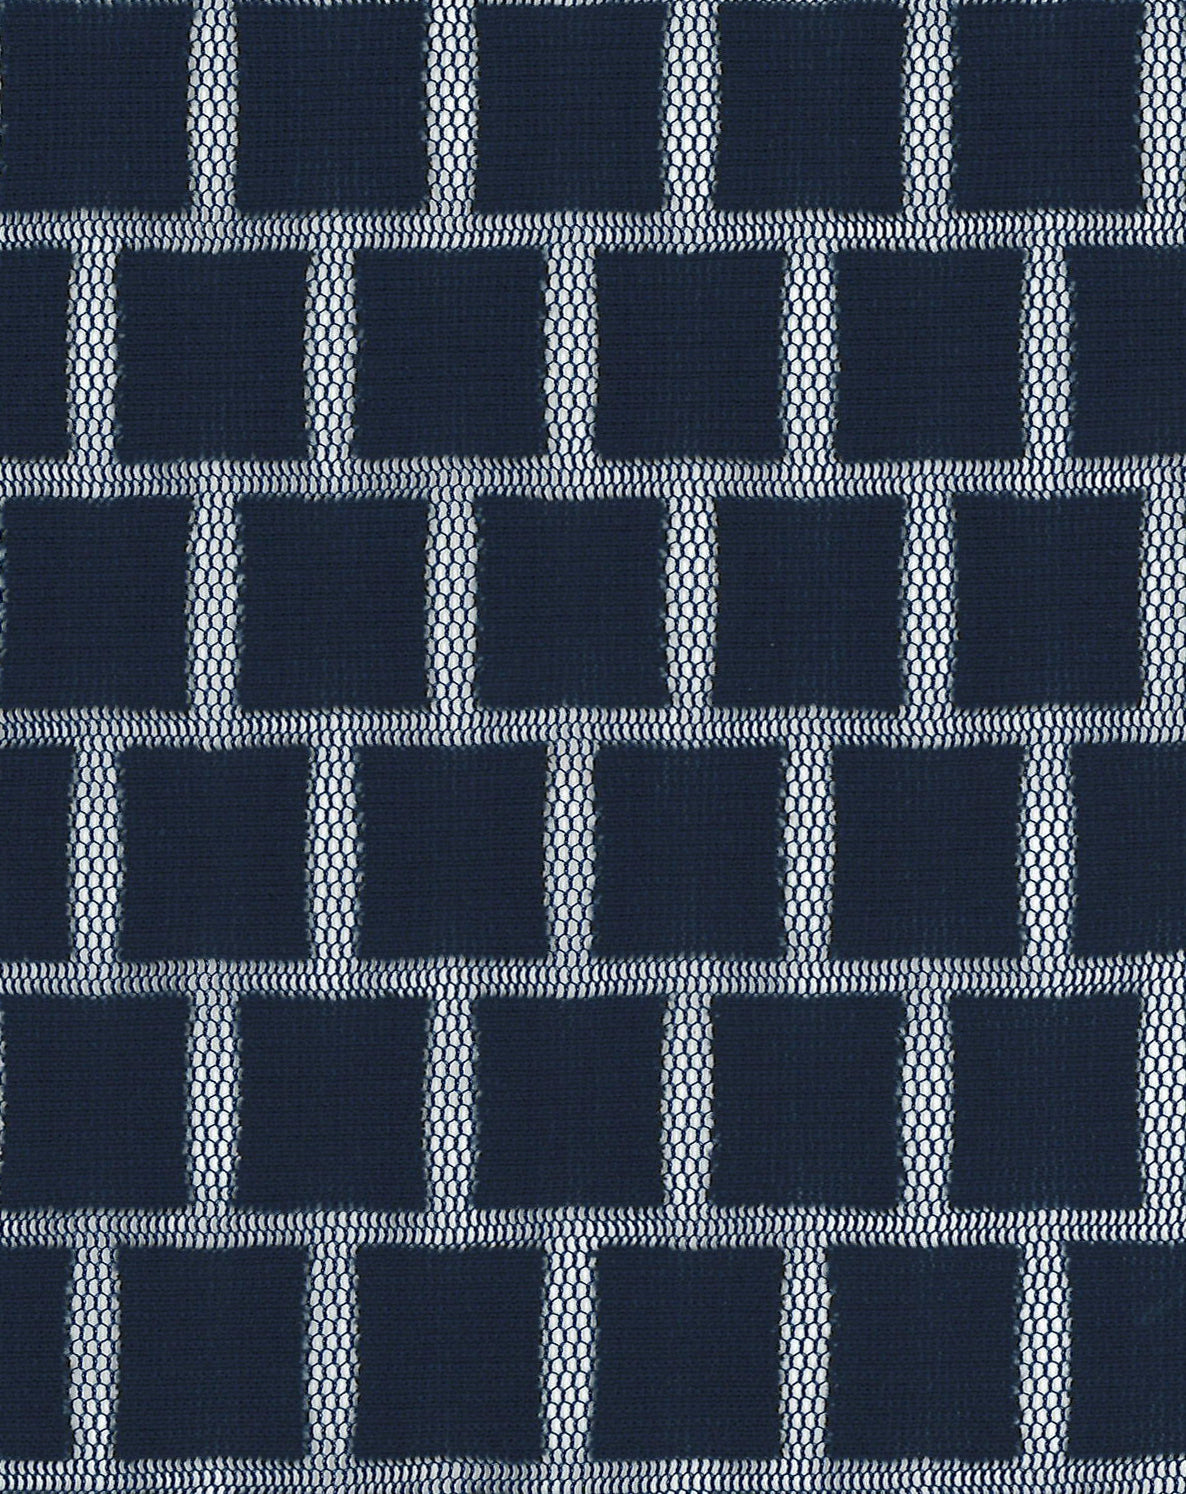 14029-04 Navy Blue Knit Mesh Square Pattern Burn-Out Plain Dyed Blend blend blue burn-out knit mesh nylon plain dyed polyester Burn-Out, Mesh - knit fabric - woven fabric - fabric company - fabric wholesale - fabric b2b - fabric factory - high quality fabric - hong kong fabric - fabric hk - acetate fabric - cotton fabric - linen fabric - metallic fabric - nylon fabric - polyester fabric - spandex fabric - chun wing hing - cwh hk - fabric worldwide ship - 針織布 - 梳織布 - 布料公司- 布料批發 - 香港布料 - 秦榮興